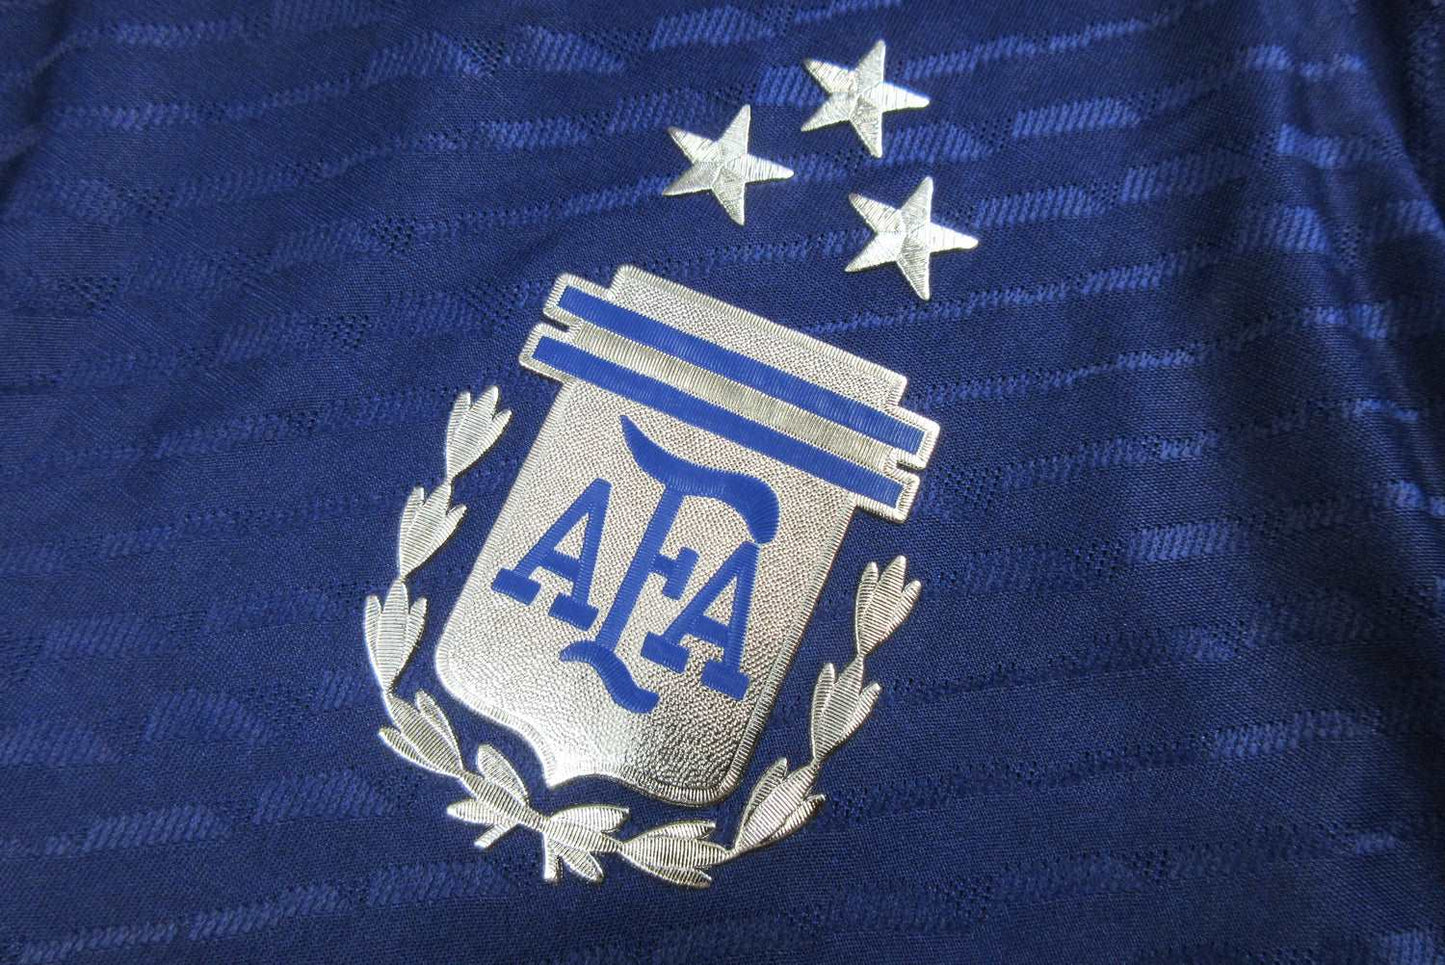 22/23 Argentina Away kit - Player version - Goatkits